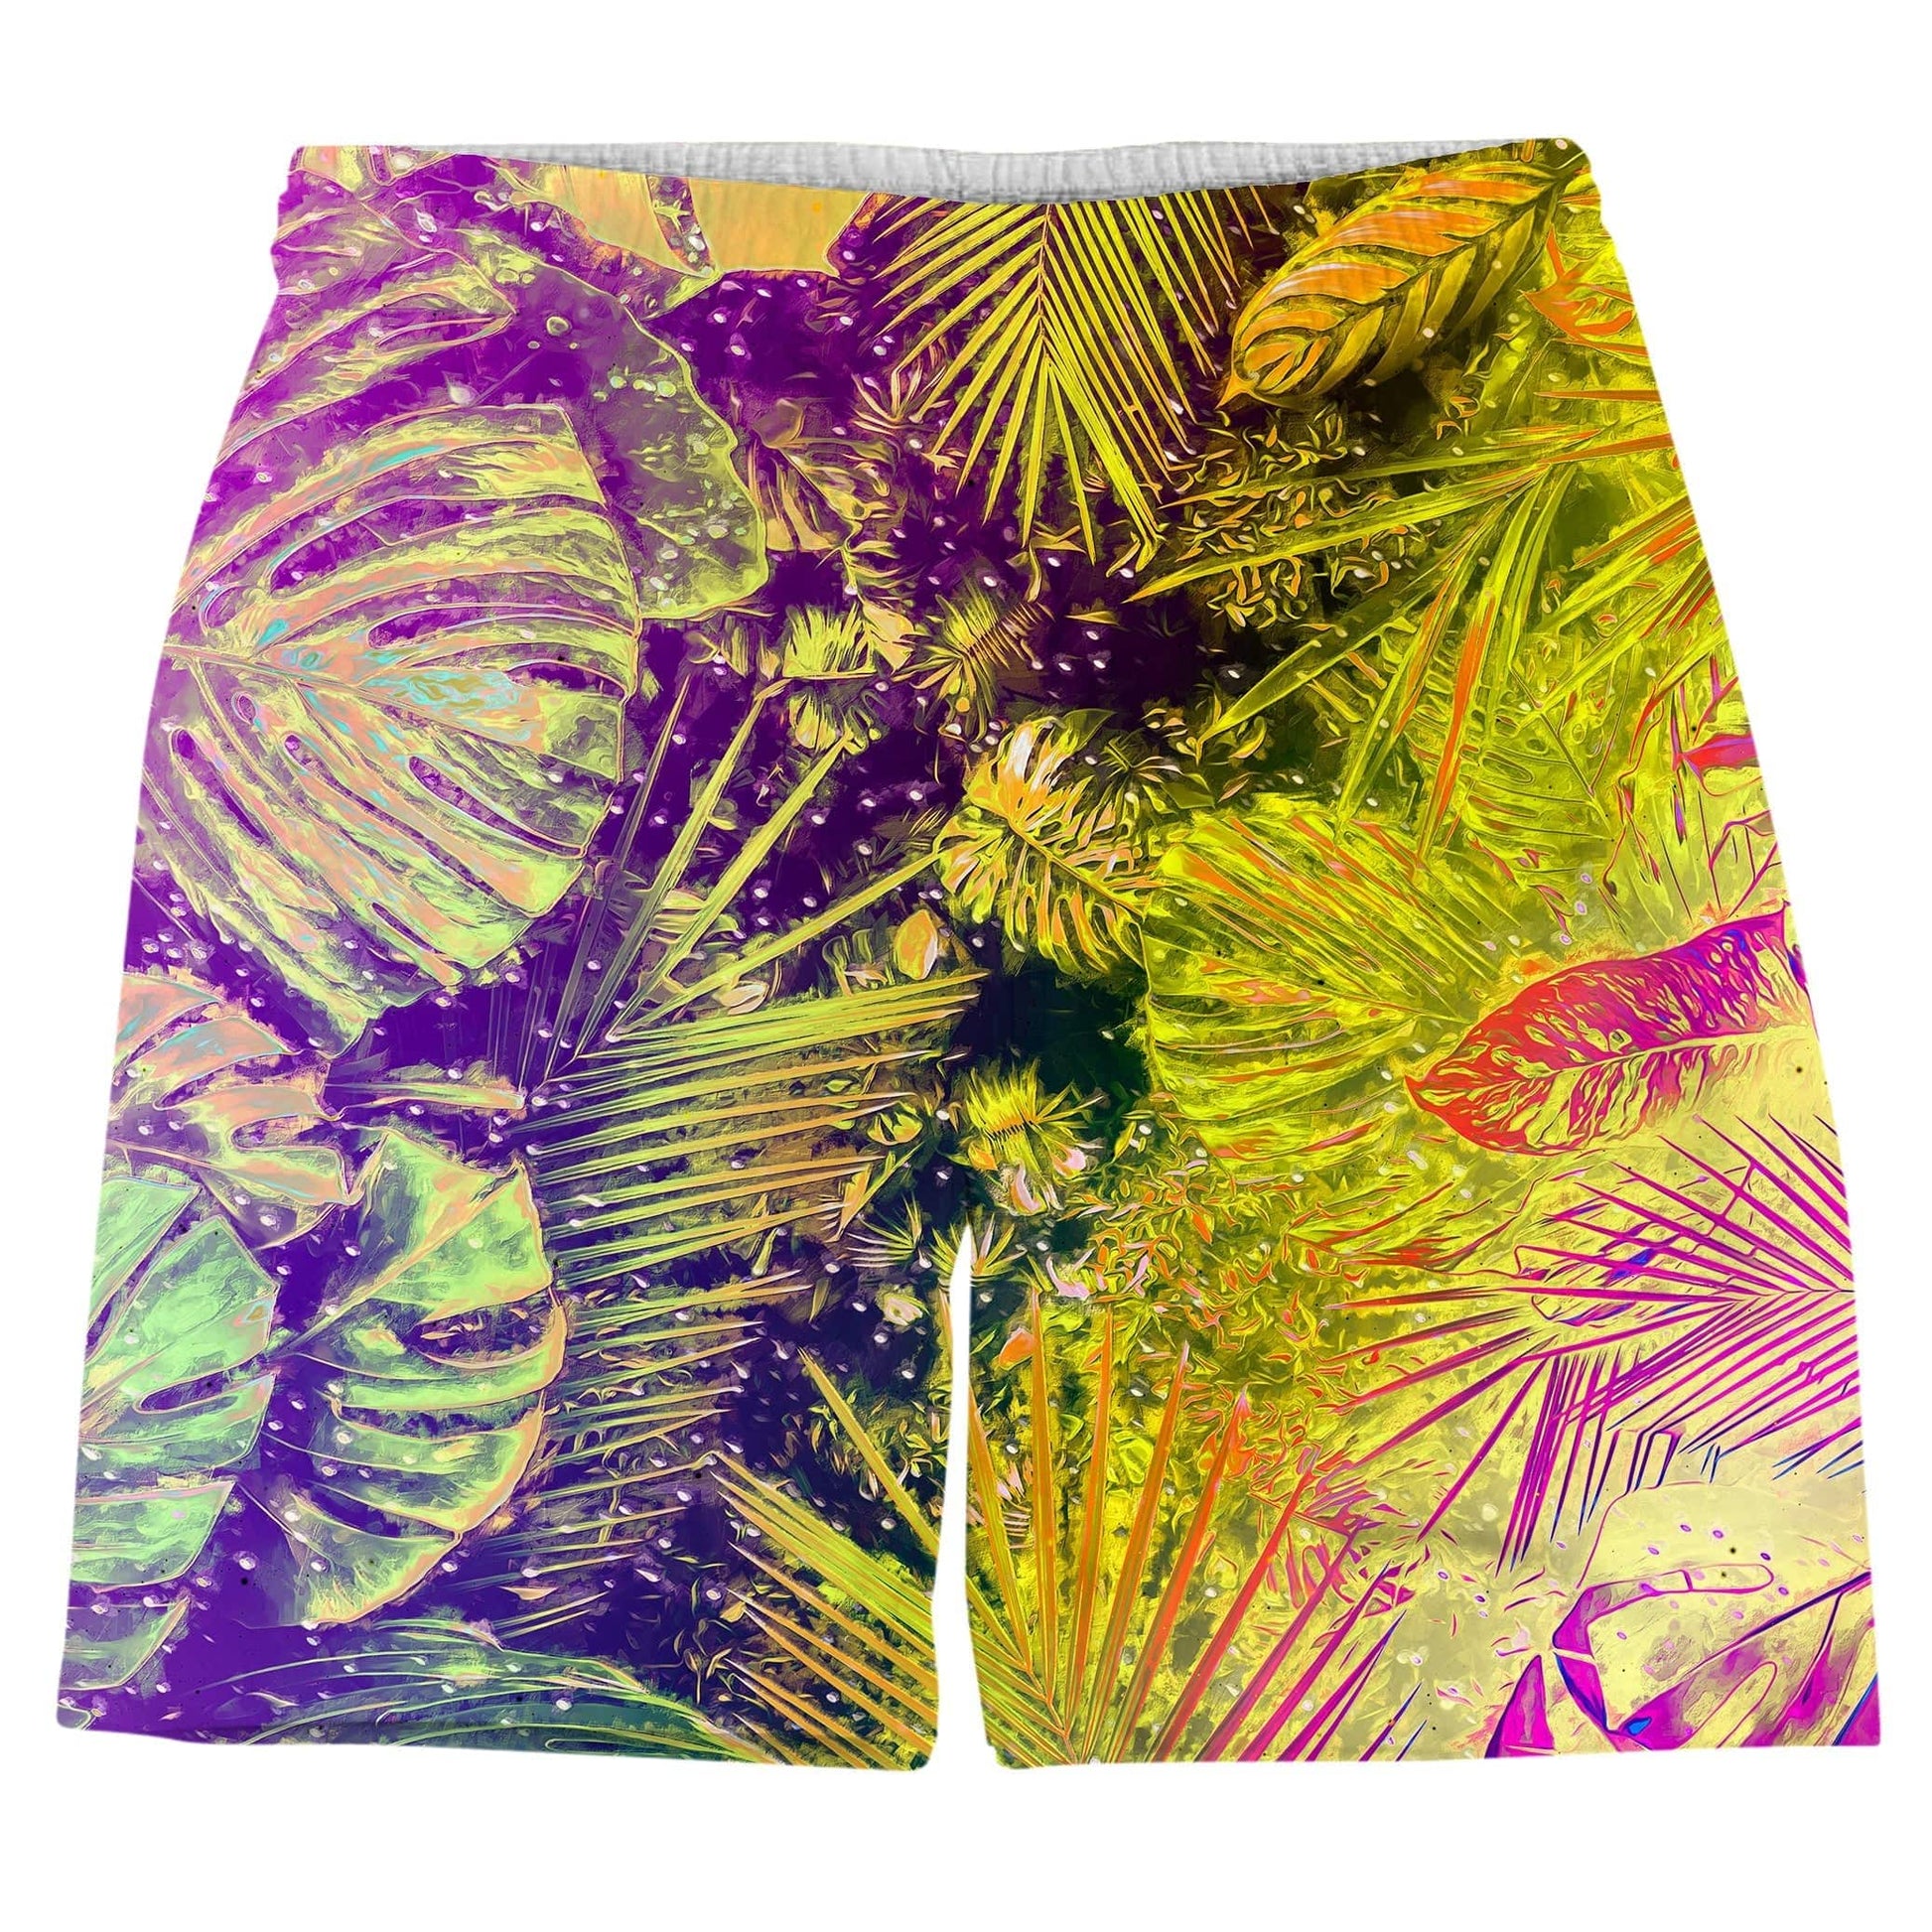 Junglist Rainbow T-Shirt and Shorts Combo, Yantrart Design, | iEDM